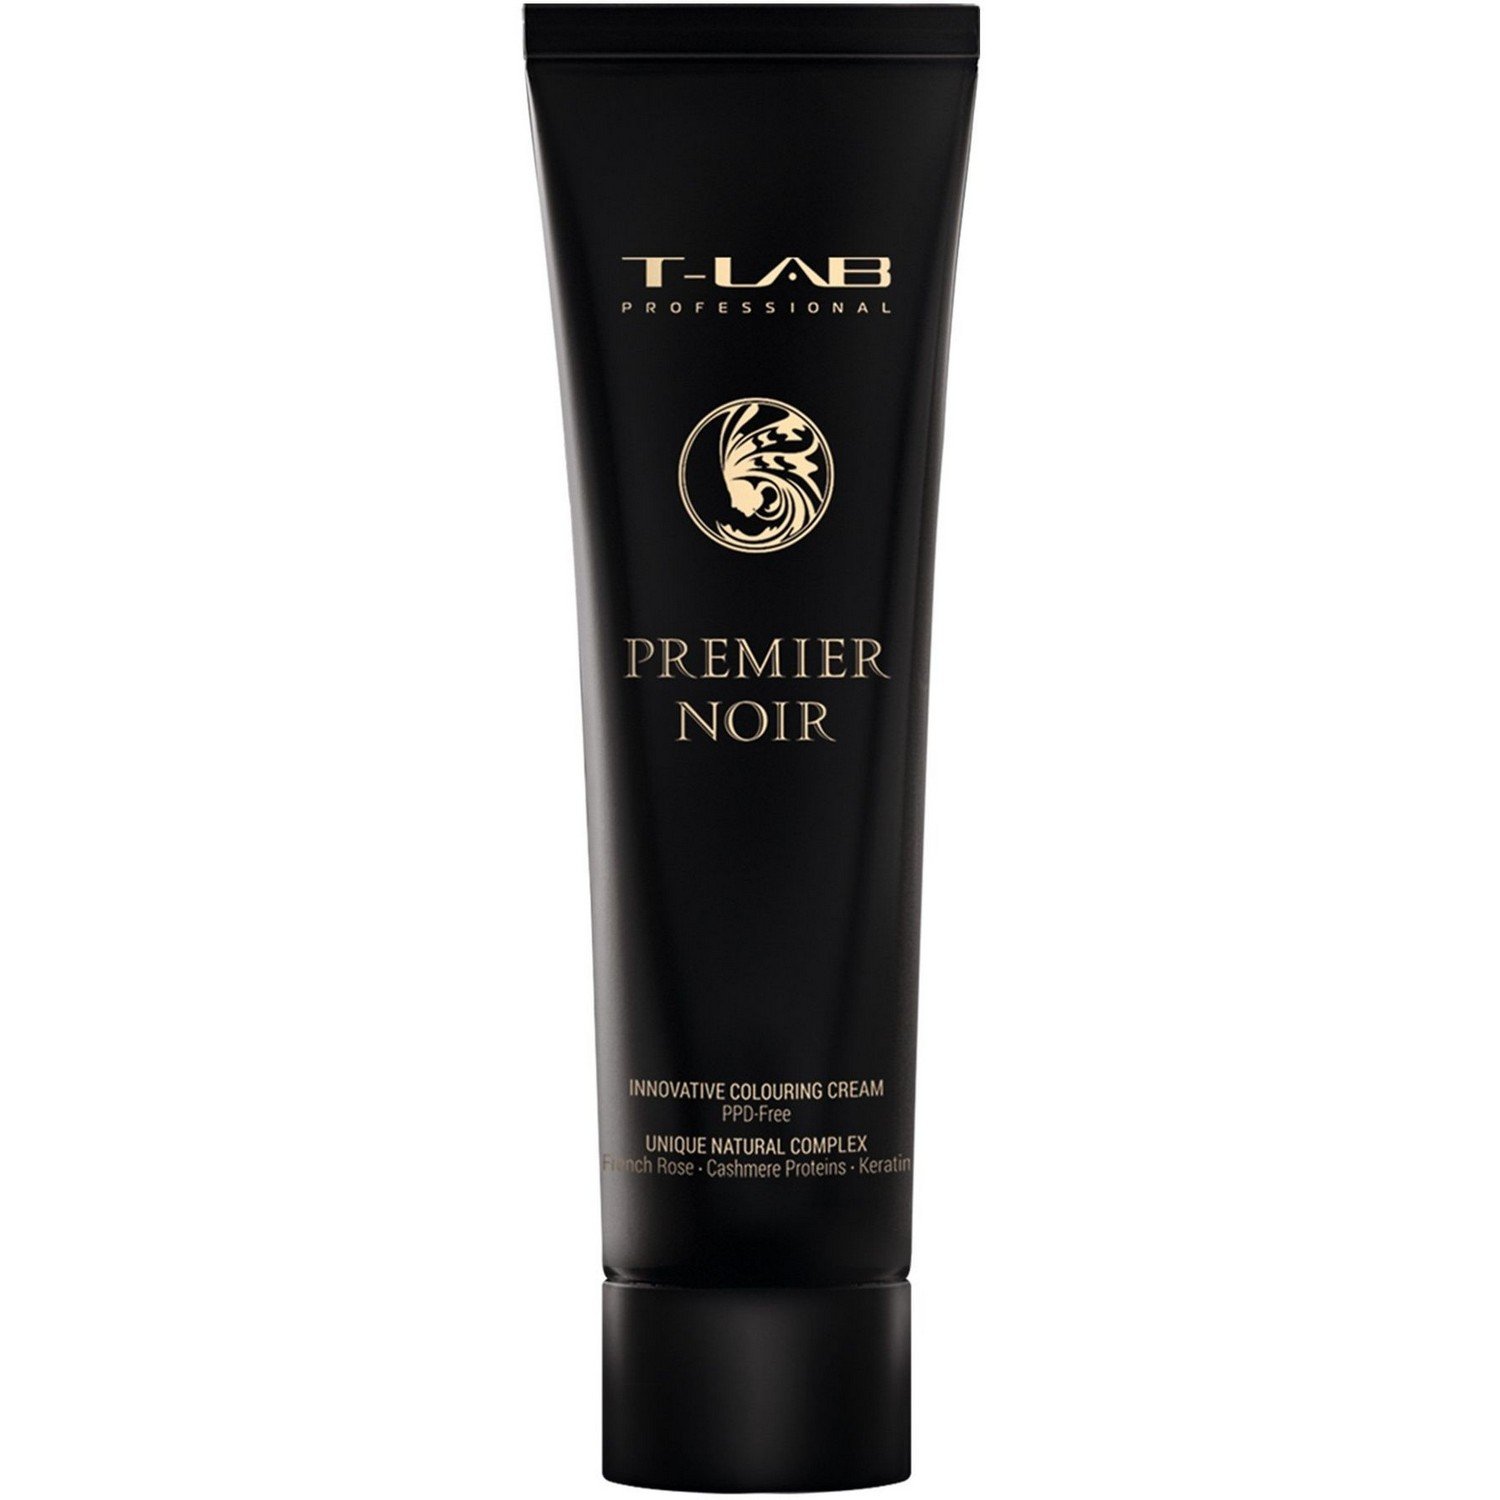 Крем-краска T-LAB Professional Premier Noir colouring cream, оттенок 10.42 (lightest copper iridescent blonde) - фото 1